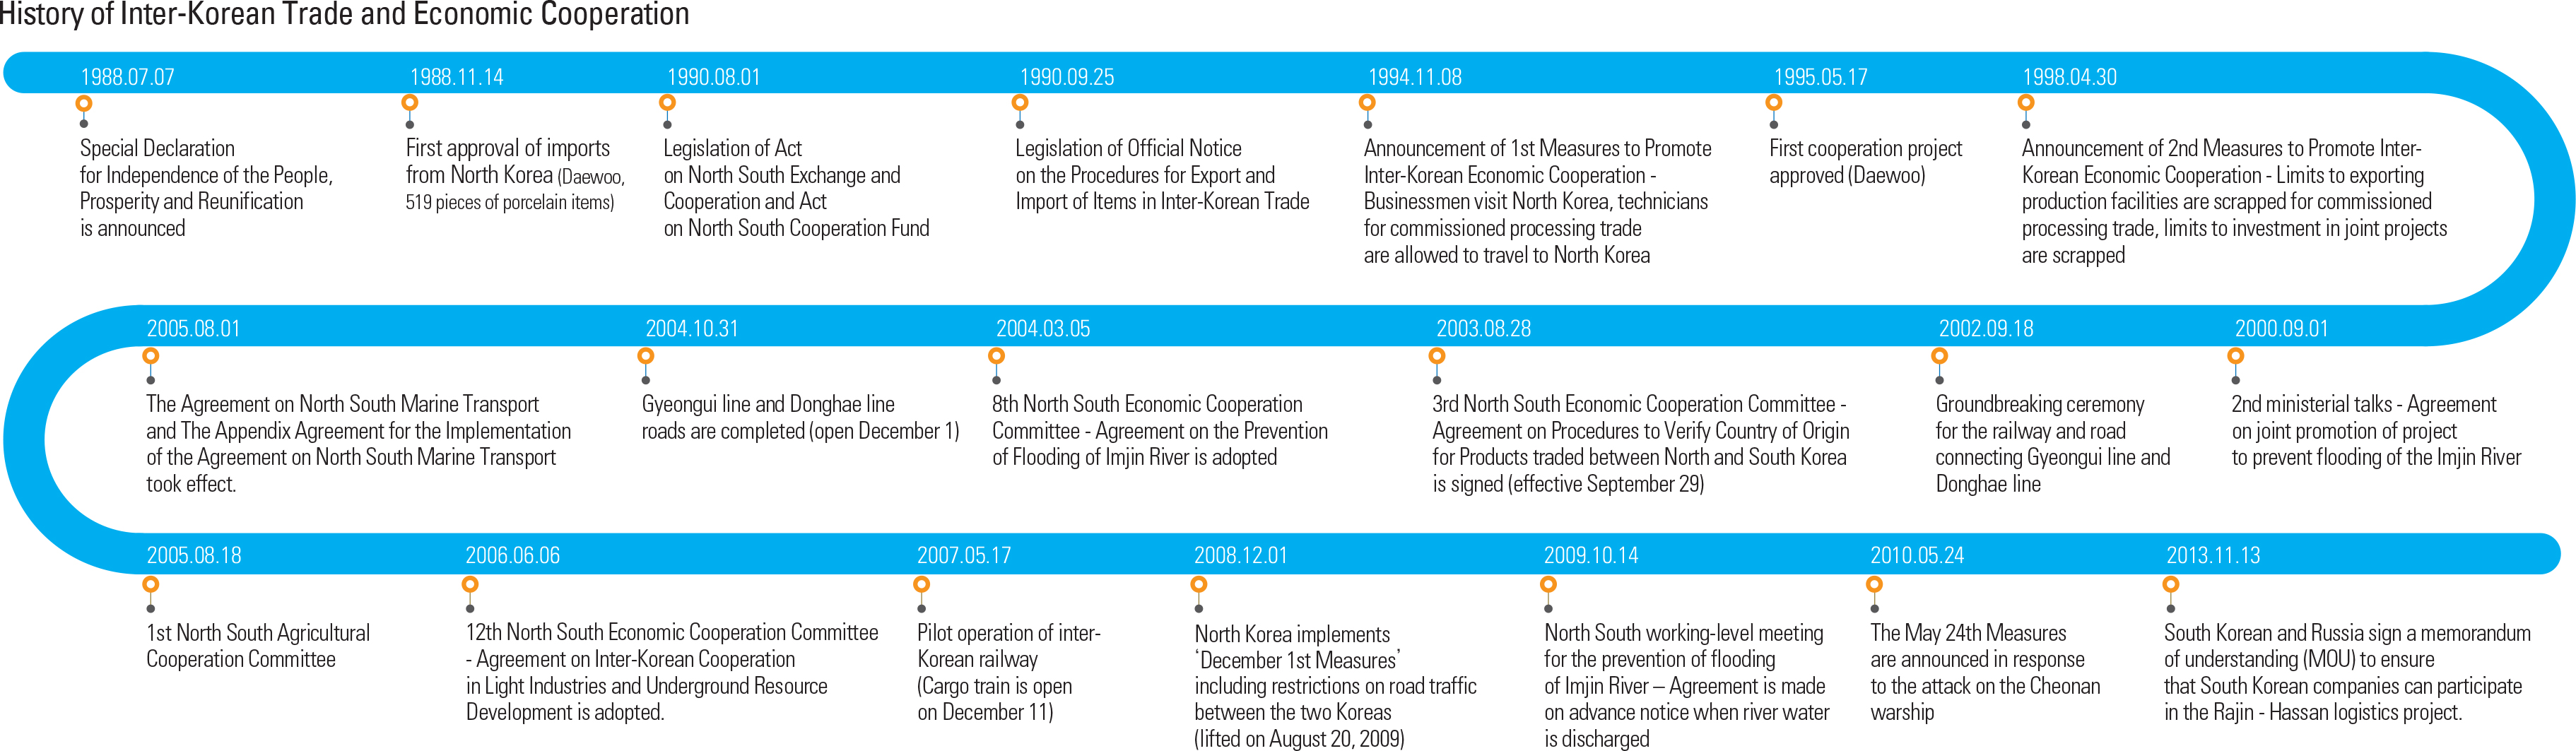 History of Inter-Korean Trade and Economic Cooperation<p class="oz_zoom" zimg="http://imagedata.cafe24.com/us_1/us1_51-1_2.jpg"><span style="font-family:Nanum Myeongjo;"><span style="font-size:18px;"><span class="label label-danger">UPDATE DATA</span></span></p>